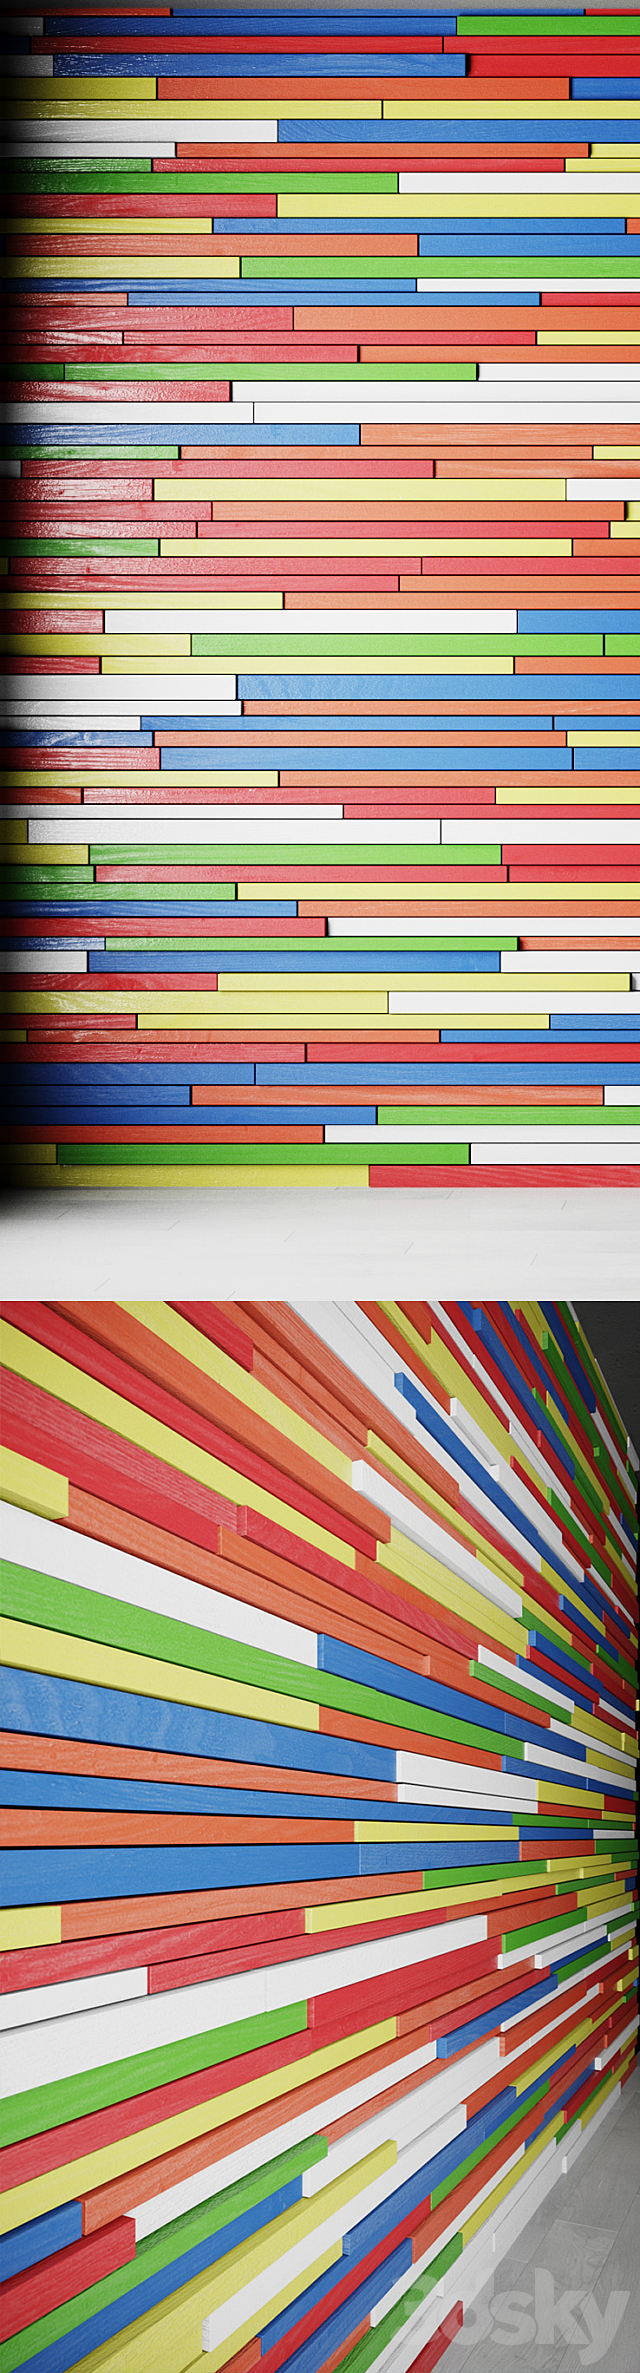 Wall of colored wooden slats 3DSMax File - thumbnail 2